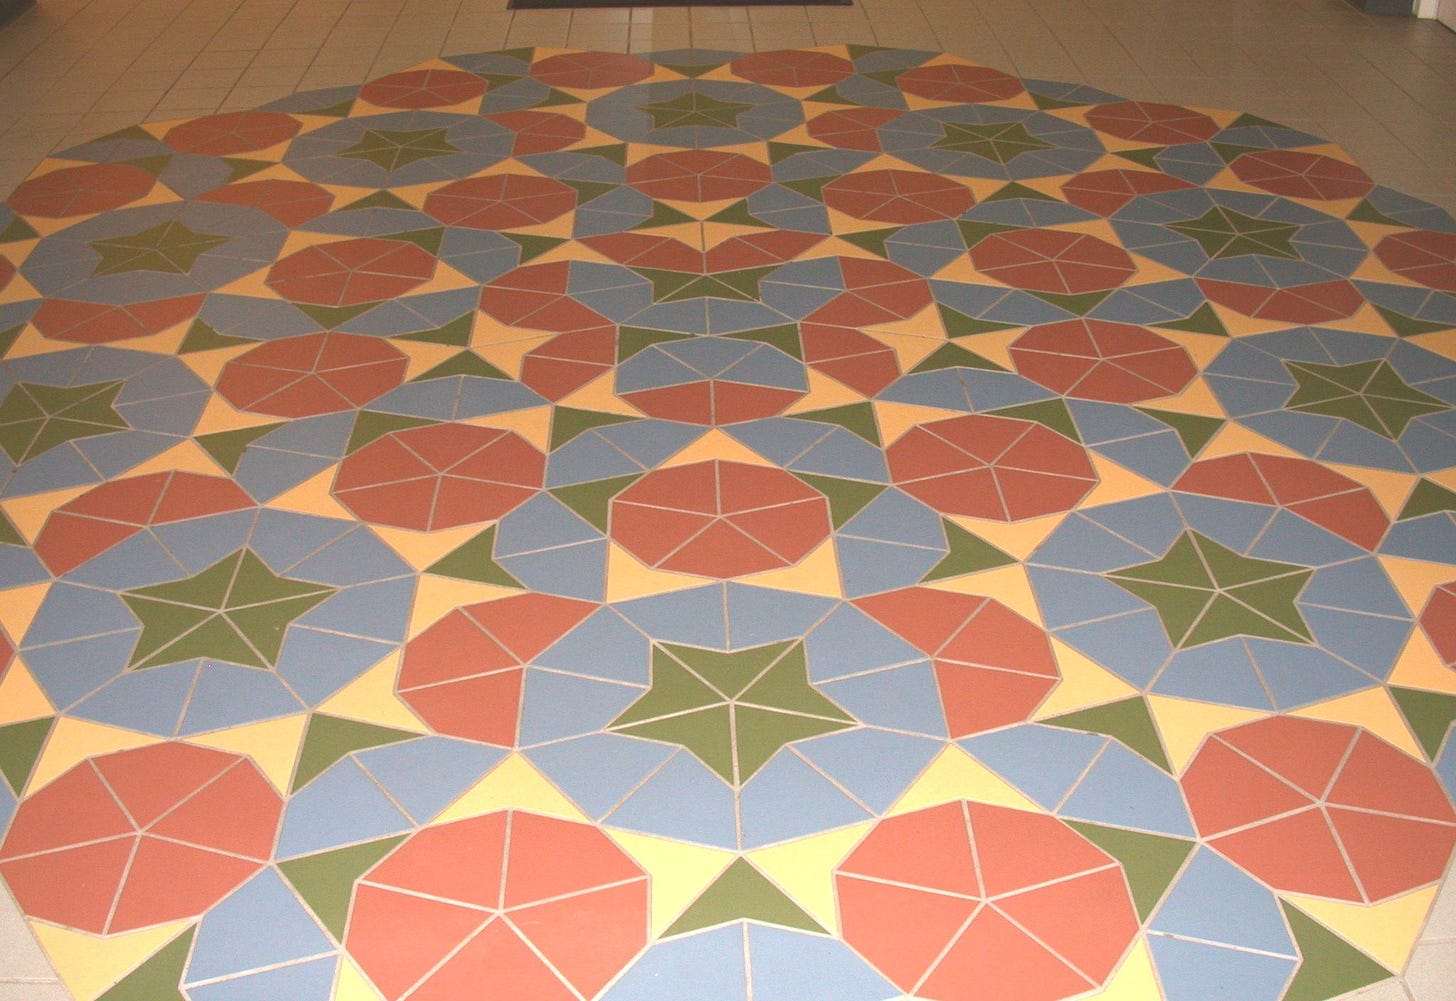 Penrose Tile in the Carleton College Math/CS Building. | Penrose tiling ...